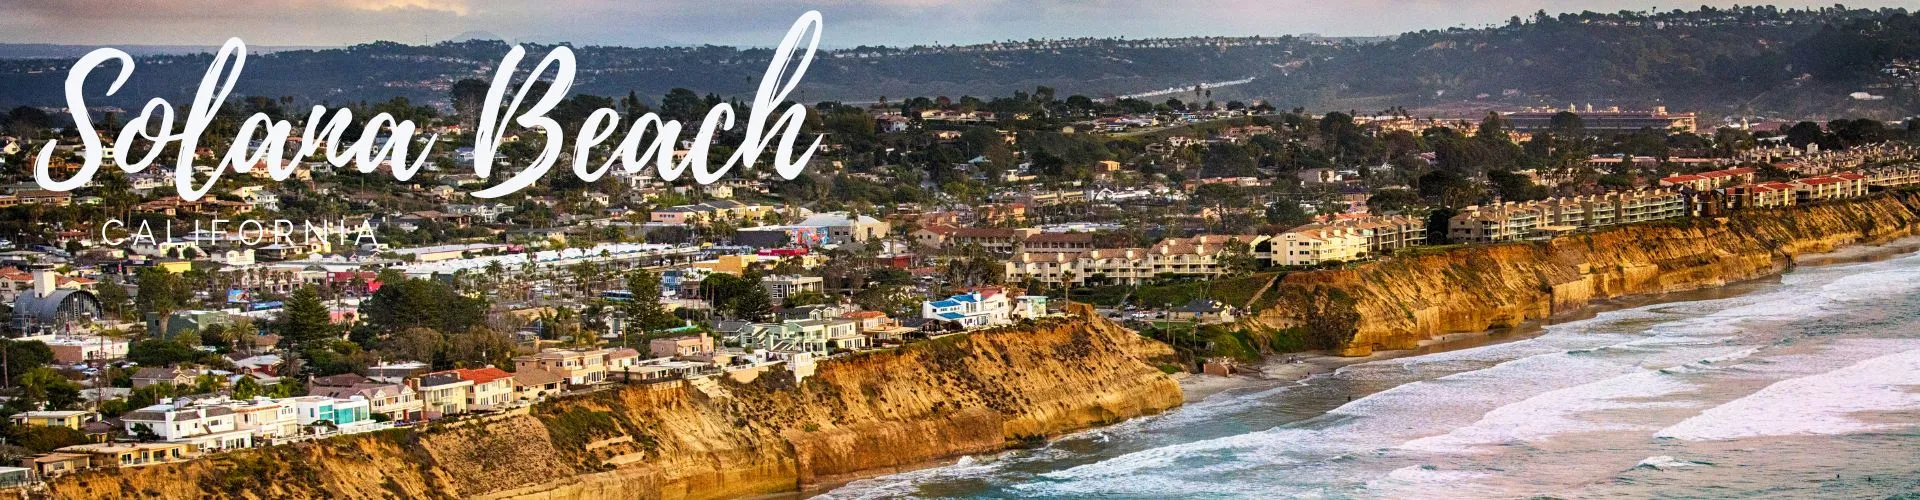 Solana Beach Houses for Sale in San Diego North County Coastal